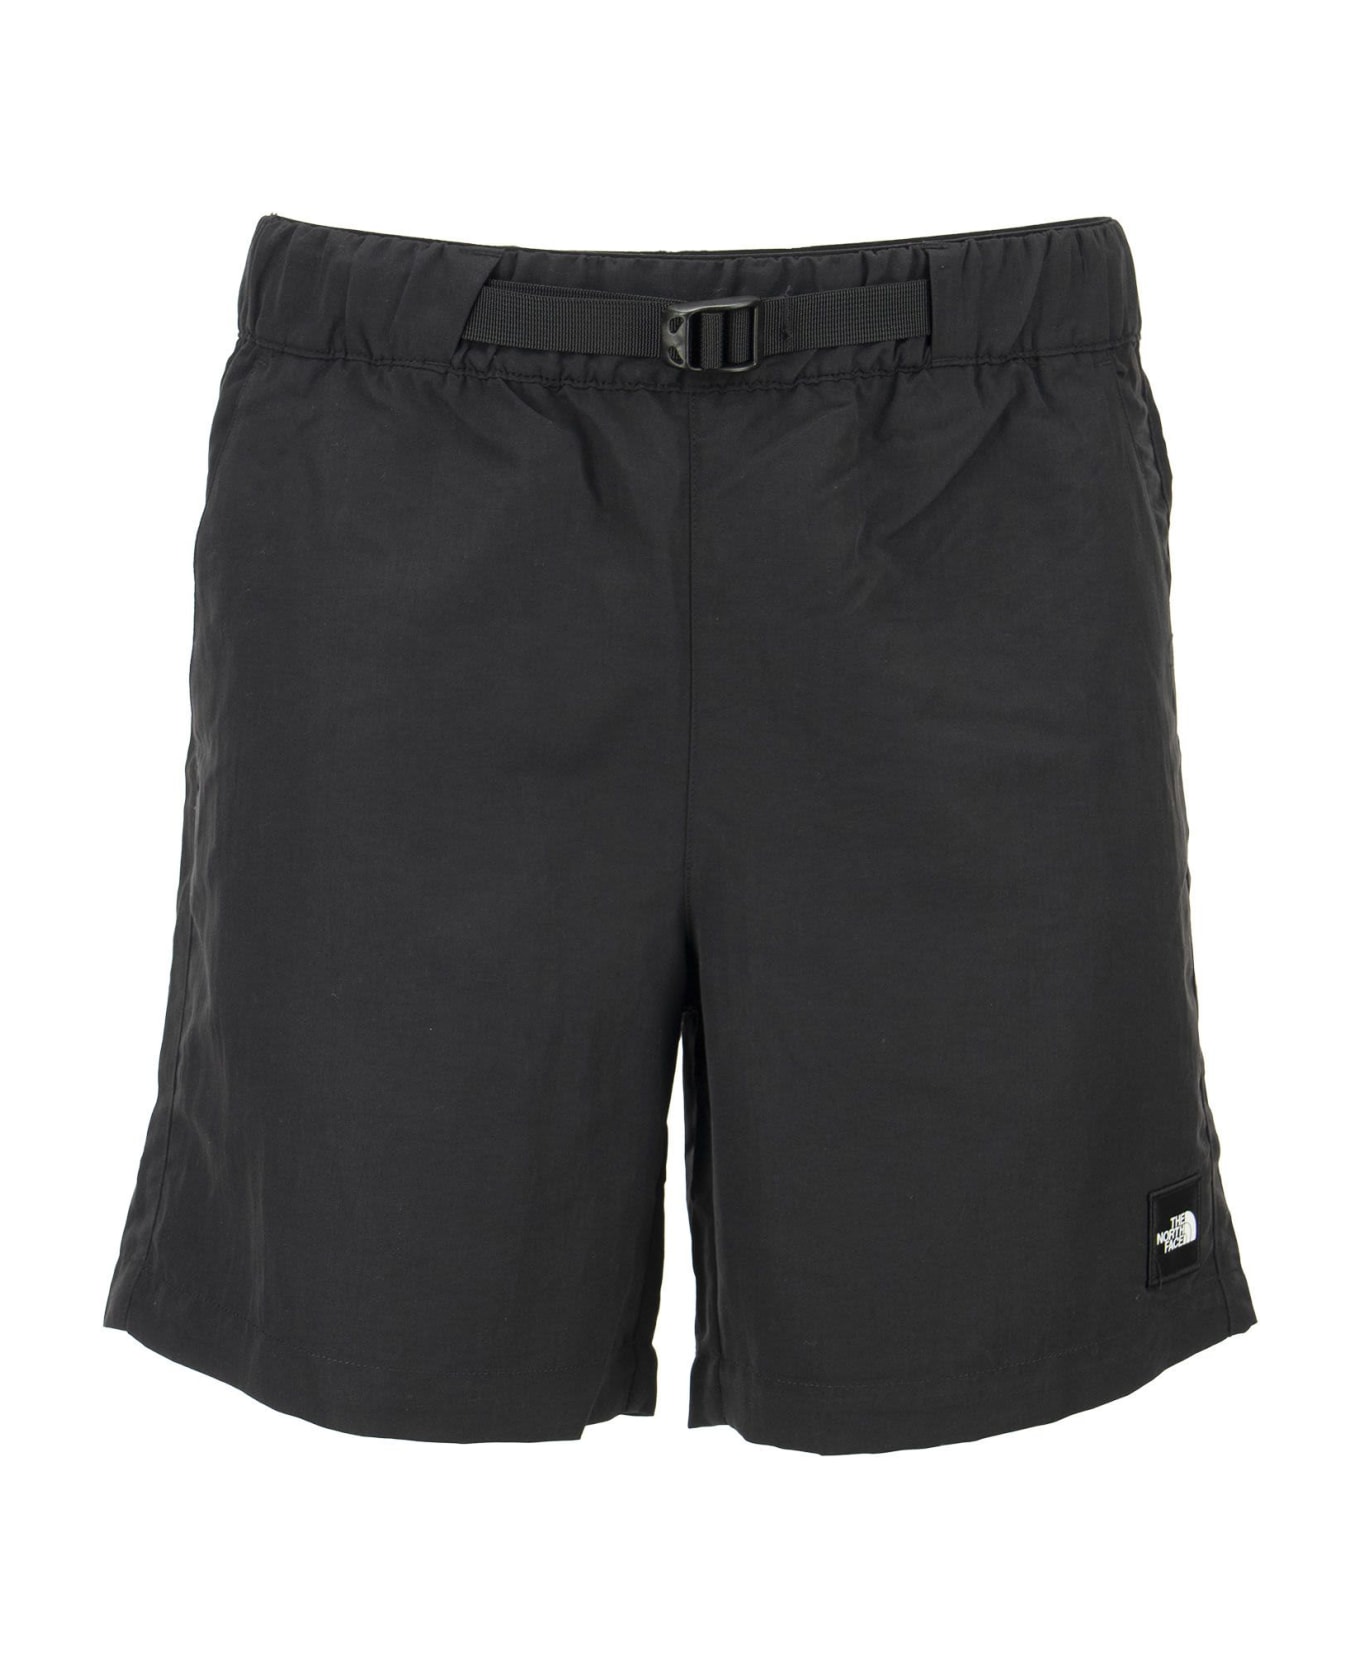 The North Face Men's Short Shorts - Black